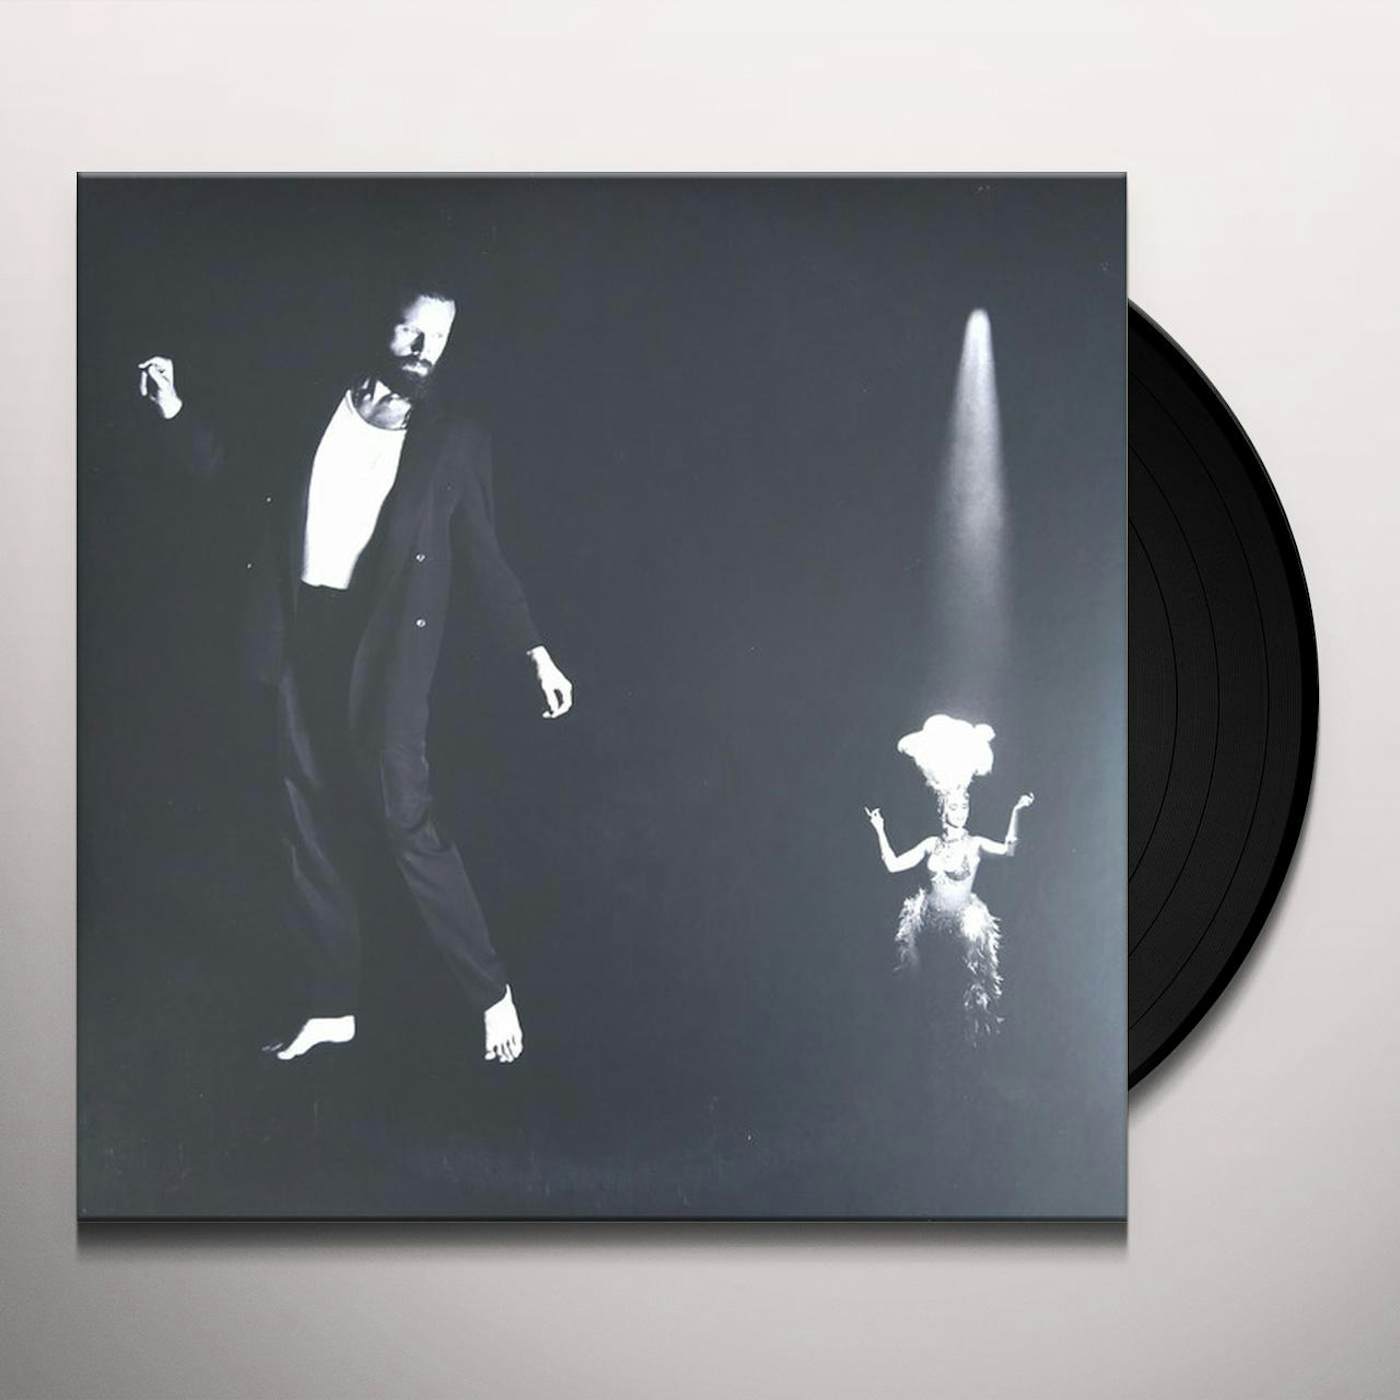 Father John Misty CHLOE & THE NEXT 20TH CENTURY Vinyl Record